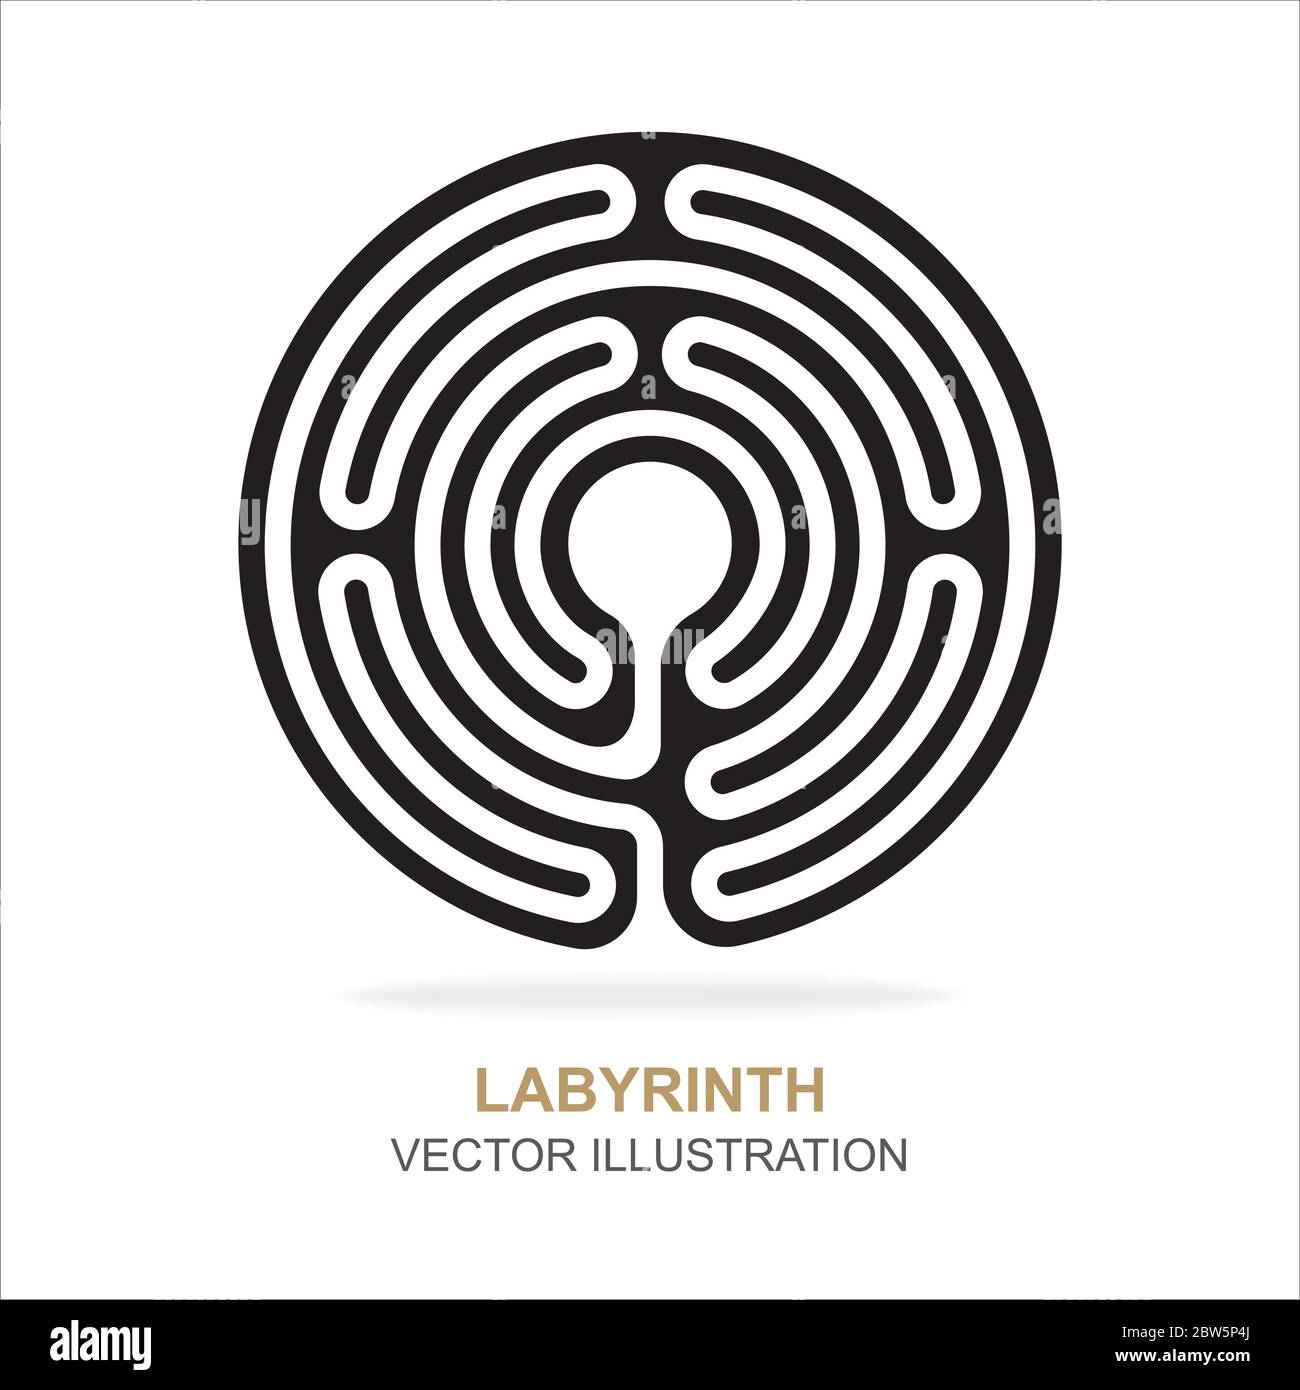 Labyrinth. Illustration des Labyrinthvektors. Labyrinth-Symbol und Hintergrund. Teil des Sets. Stock Vektor